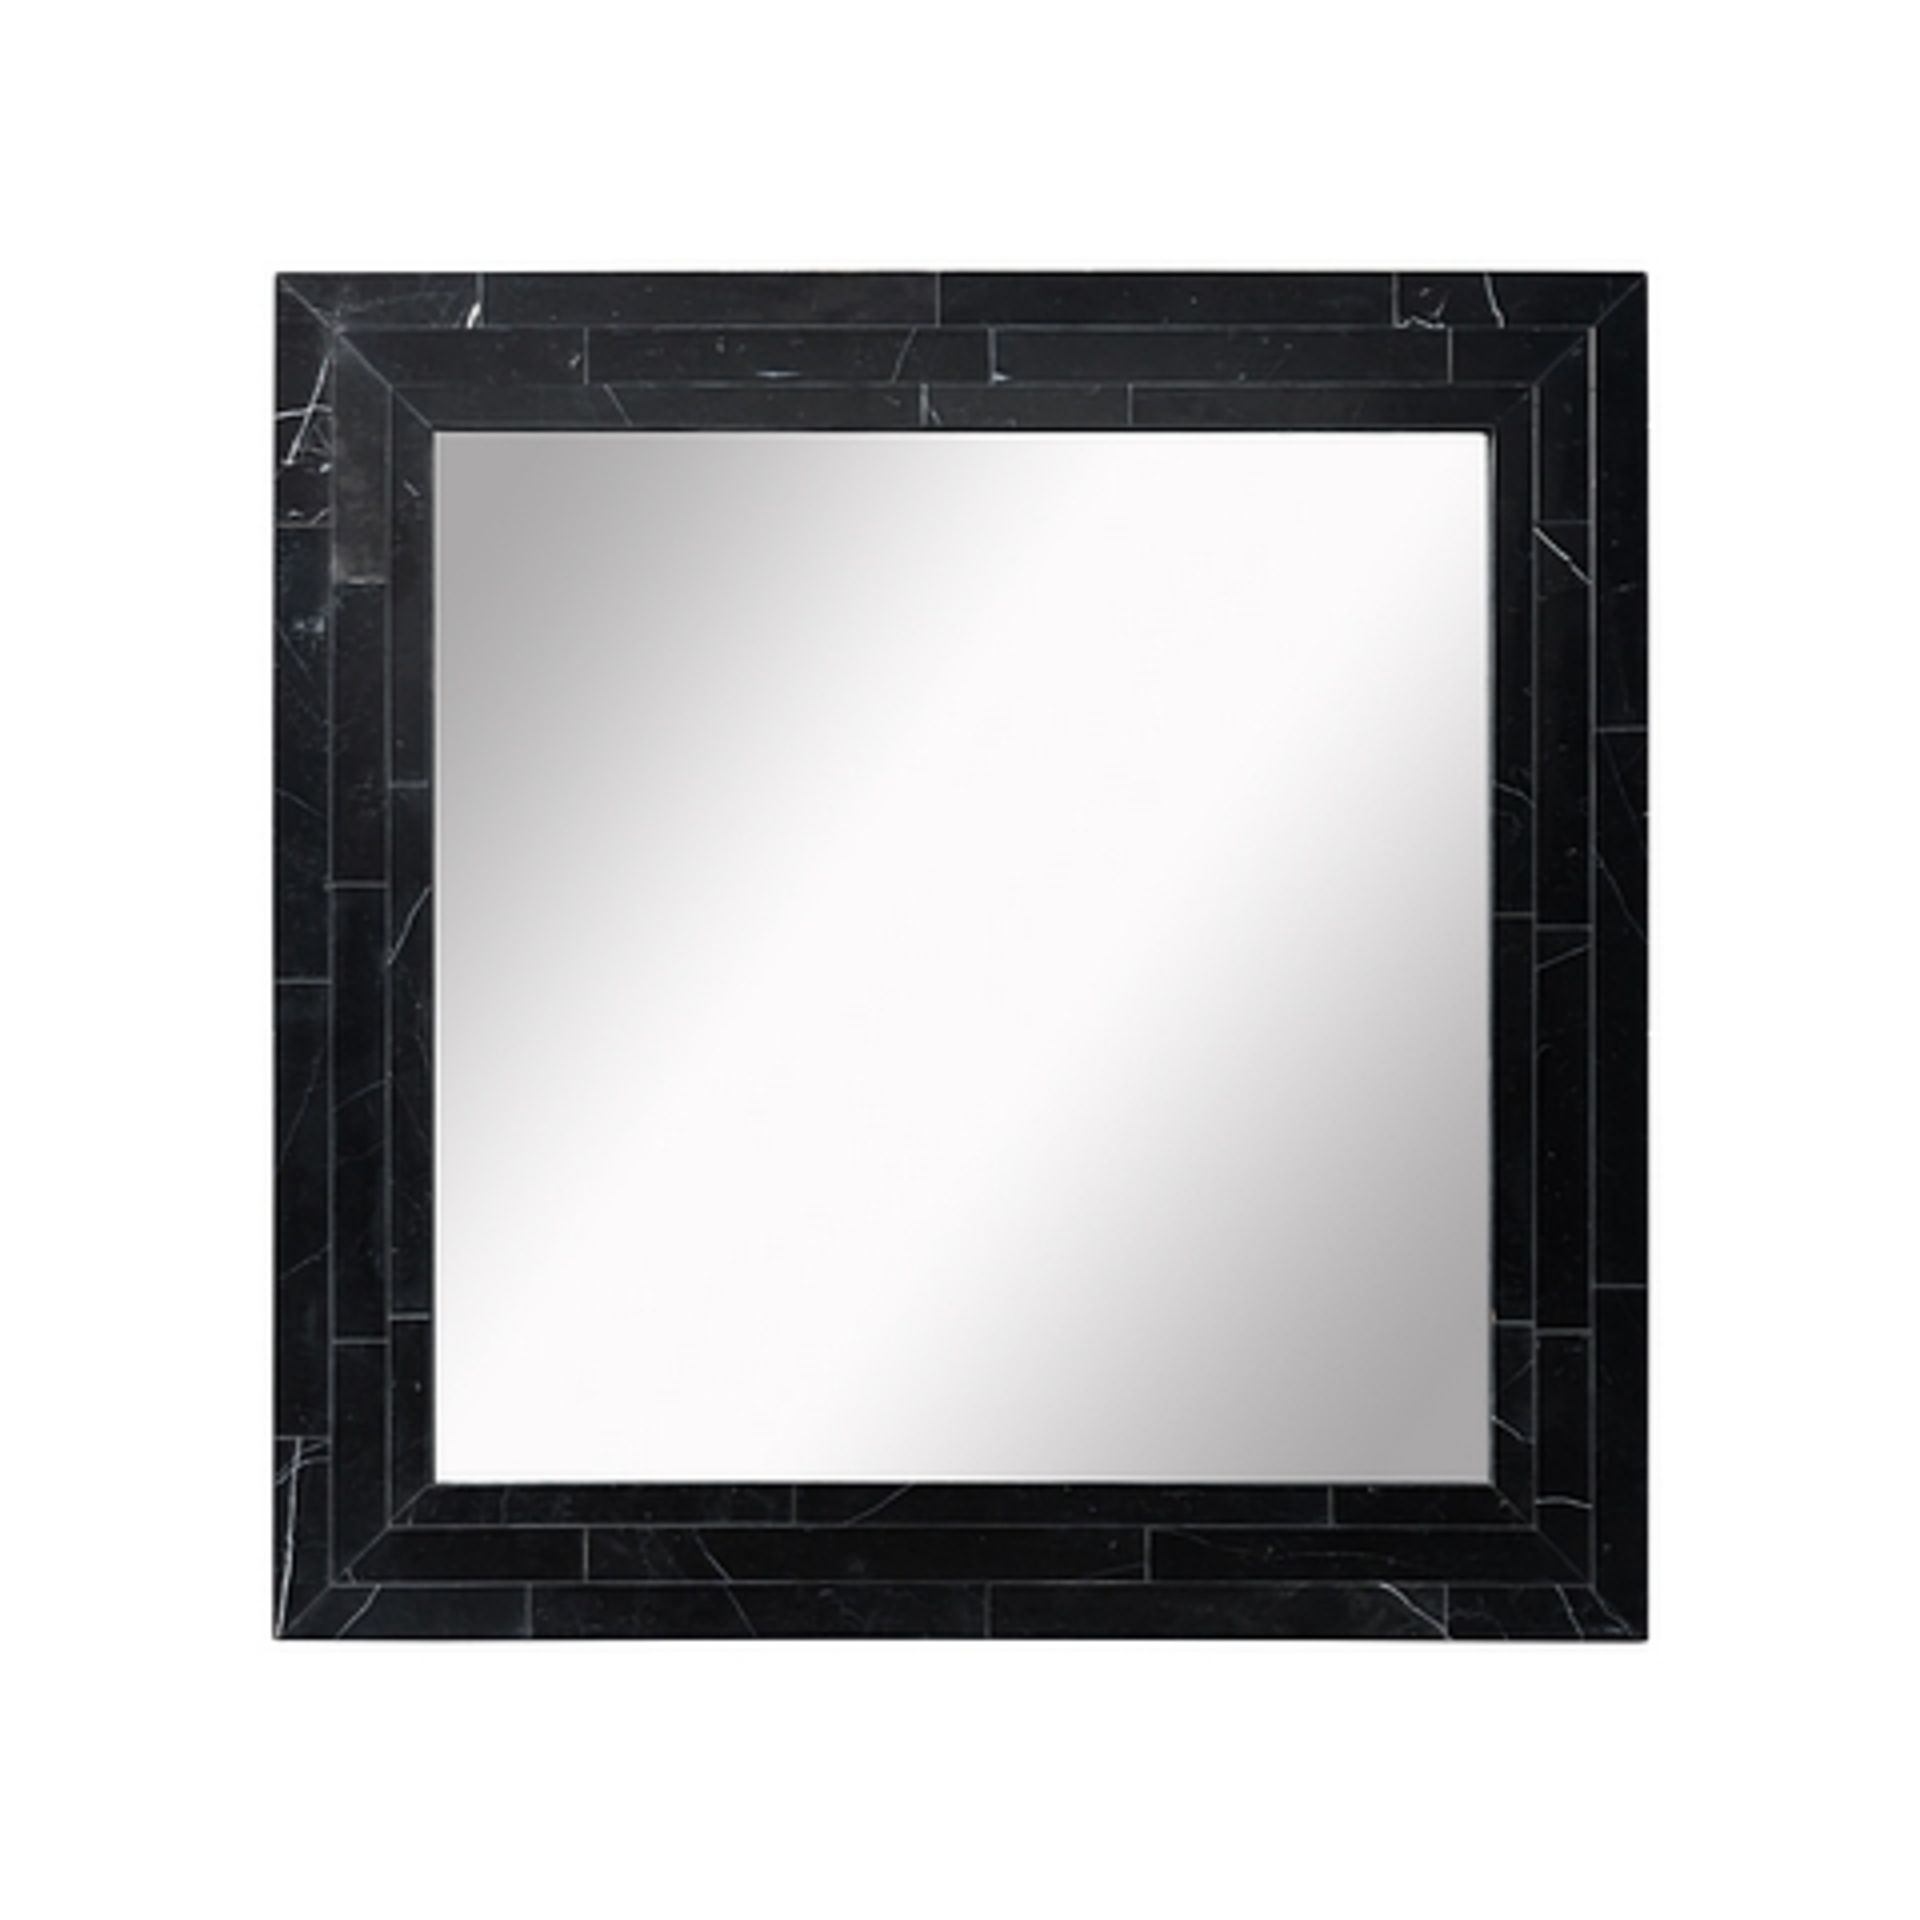 Blockos Mirror (135x135) Marble Black Polished 135x135x5.6cm RRP £ 1860